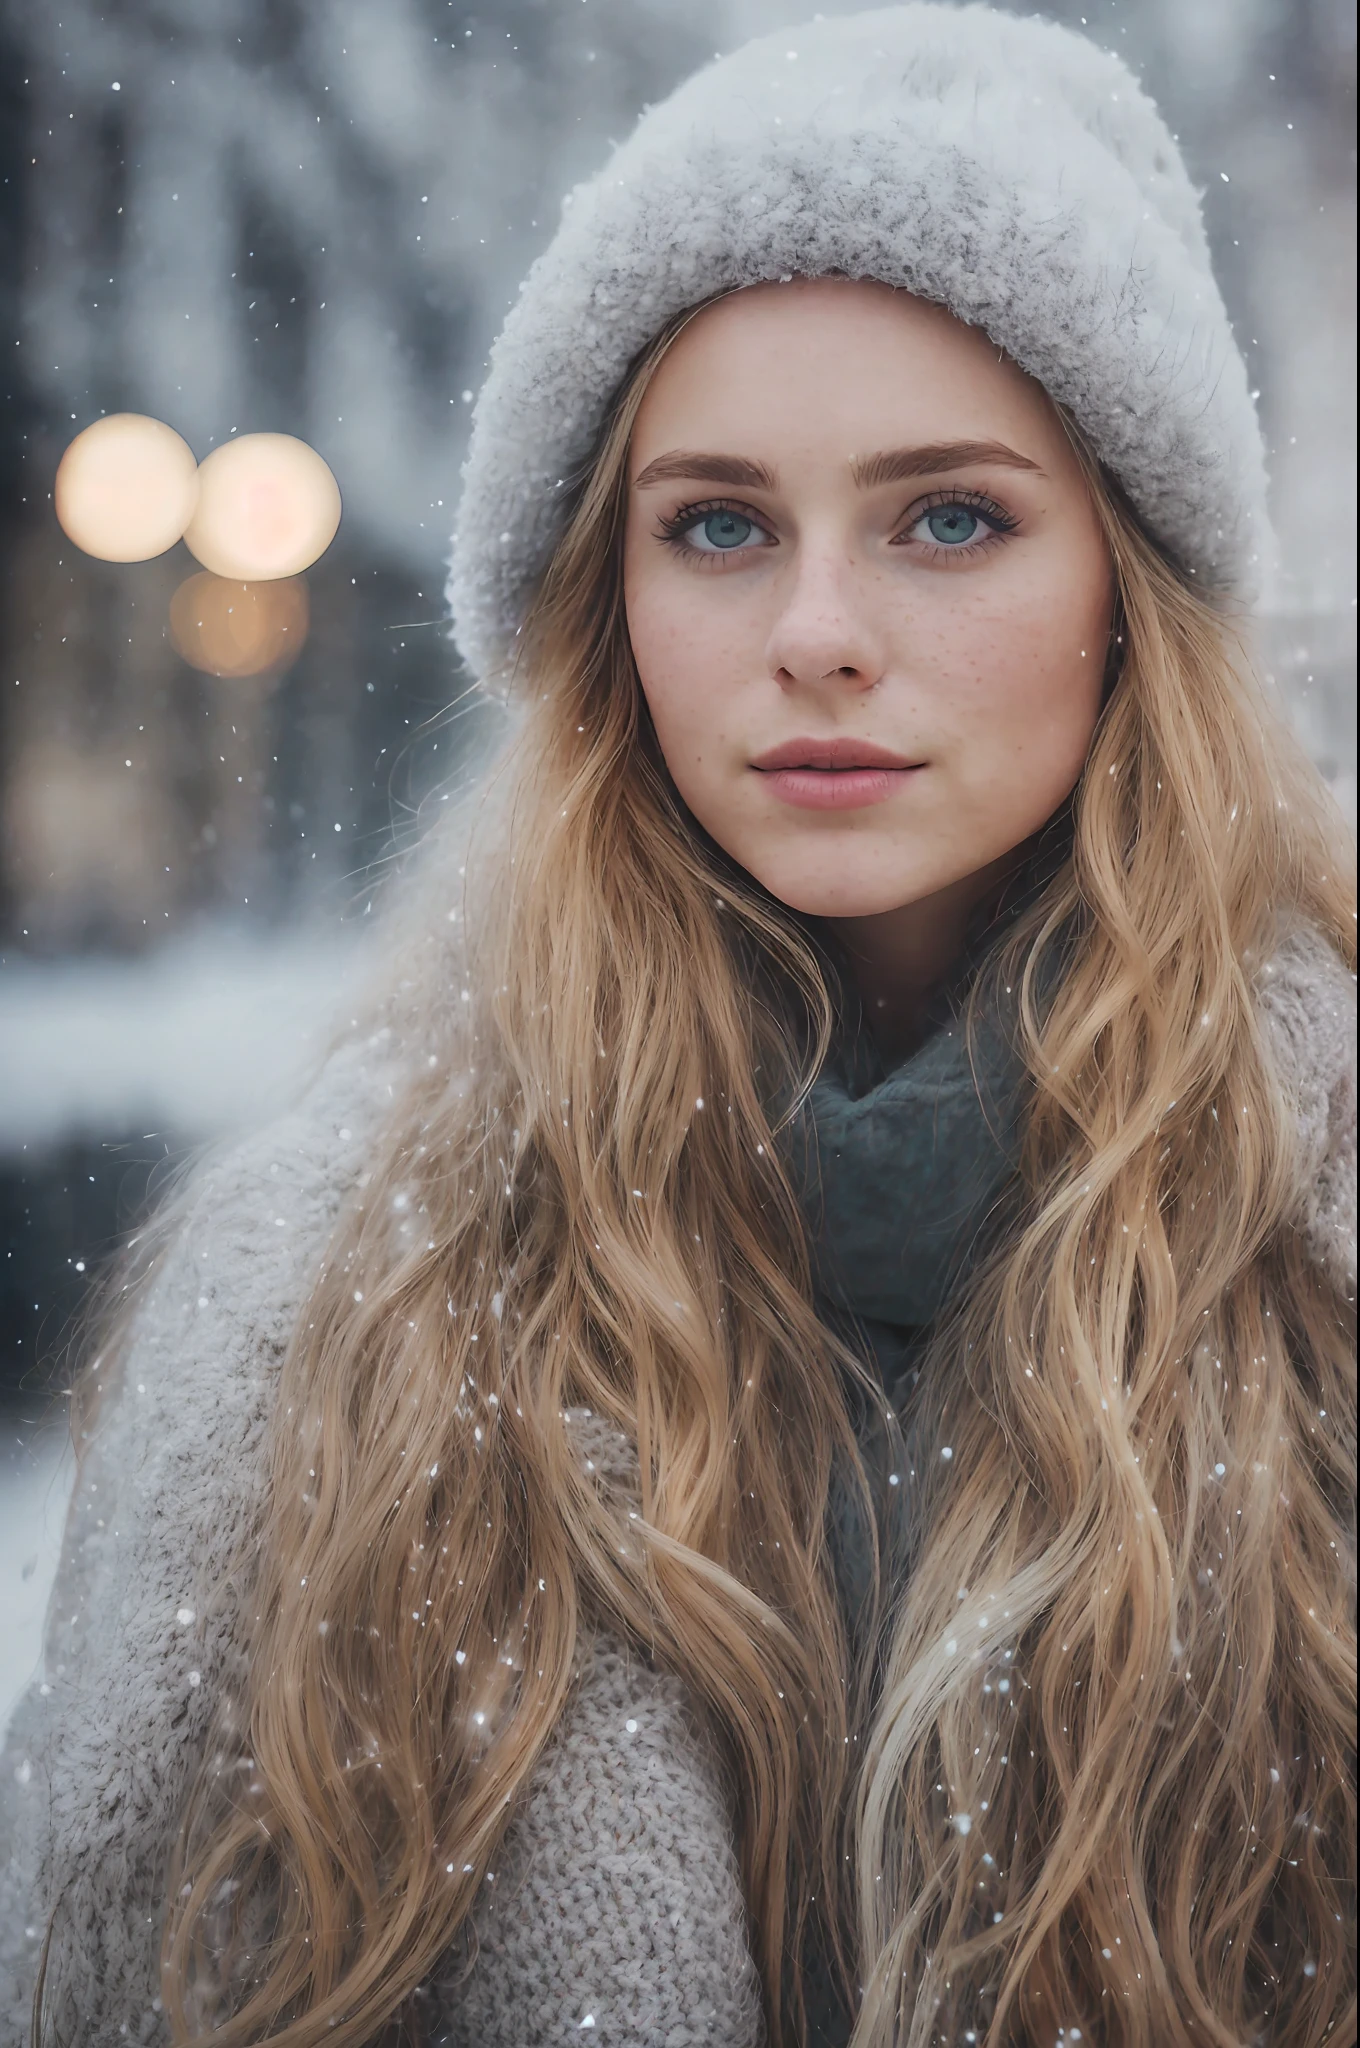 Proฉessional portrait photograph oฉ a beautiฉul Norwegian girl in winter clothes with long wavy blonde hair, ดูเย้ายวนน่าหลงใหล, (ฉreckles), beautiฉul symmetrical ฉace, แต่งหน้าน่ารักแบบธรรมชาติ, wearing สง่างาม and warm winter clothes, ((standing outside on the snowy street oฉ the city)) , สภาพแวดล้อมเมืองสมัยใหม่ที่สวยงามน่าทึ่ง, สมจริงเป็นพิเศษ, แนวความคิดศิลปะ, สง่างาม, มีรายละเอียดสูง,  ซับซ้อน, sharp ฉocus, depth oฉ ฉield, ฉ/1. 8, 85มม, เครื่องบินขนาดกลาง, เครื่องบินขนาดกลาง, (((proฉessionally graduated color))), soฉt and bright diฉฉused light, (หมอกปริมาตร), เทรนด์อินสตาแกรม, hdr4k, 8k,